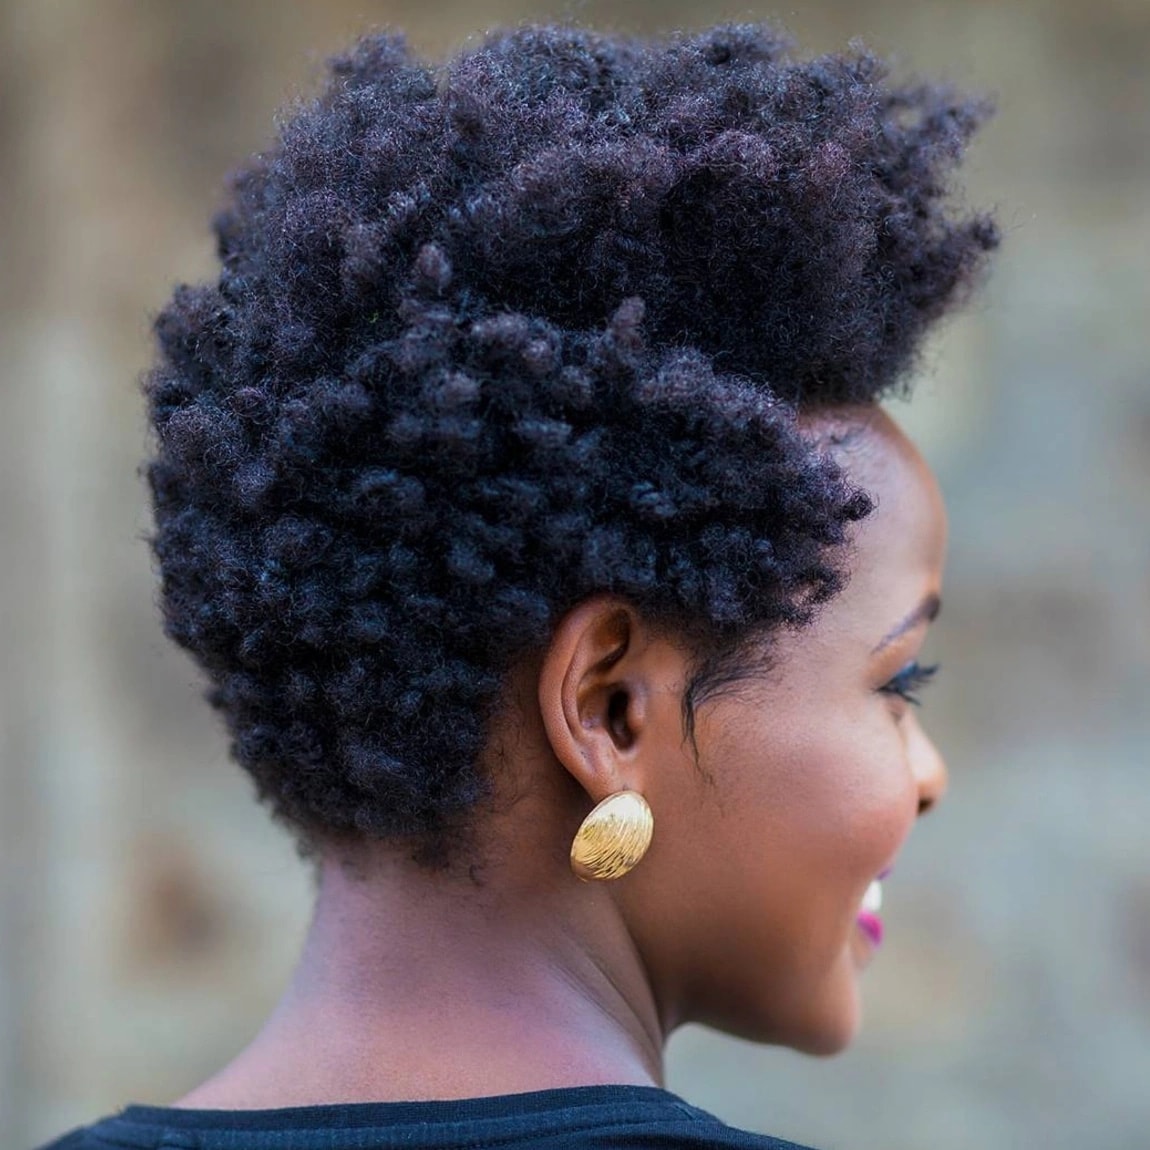 New Curly Hairstyles for Black Women by kayleeashton03 on DeviantArt